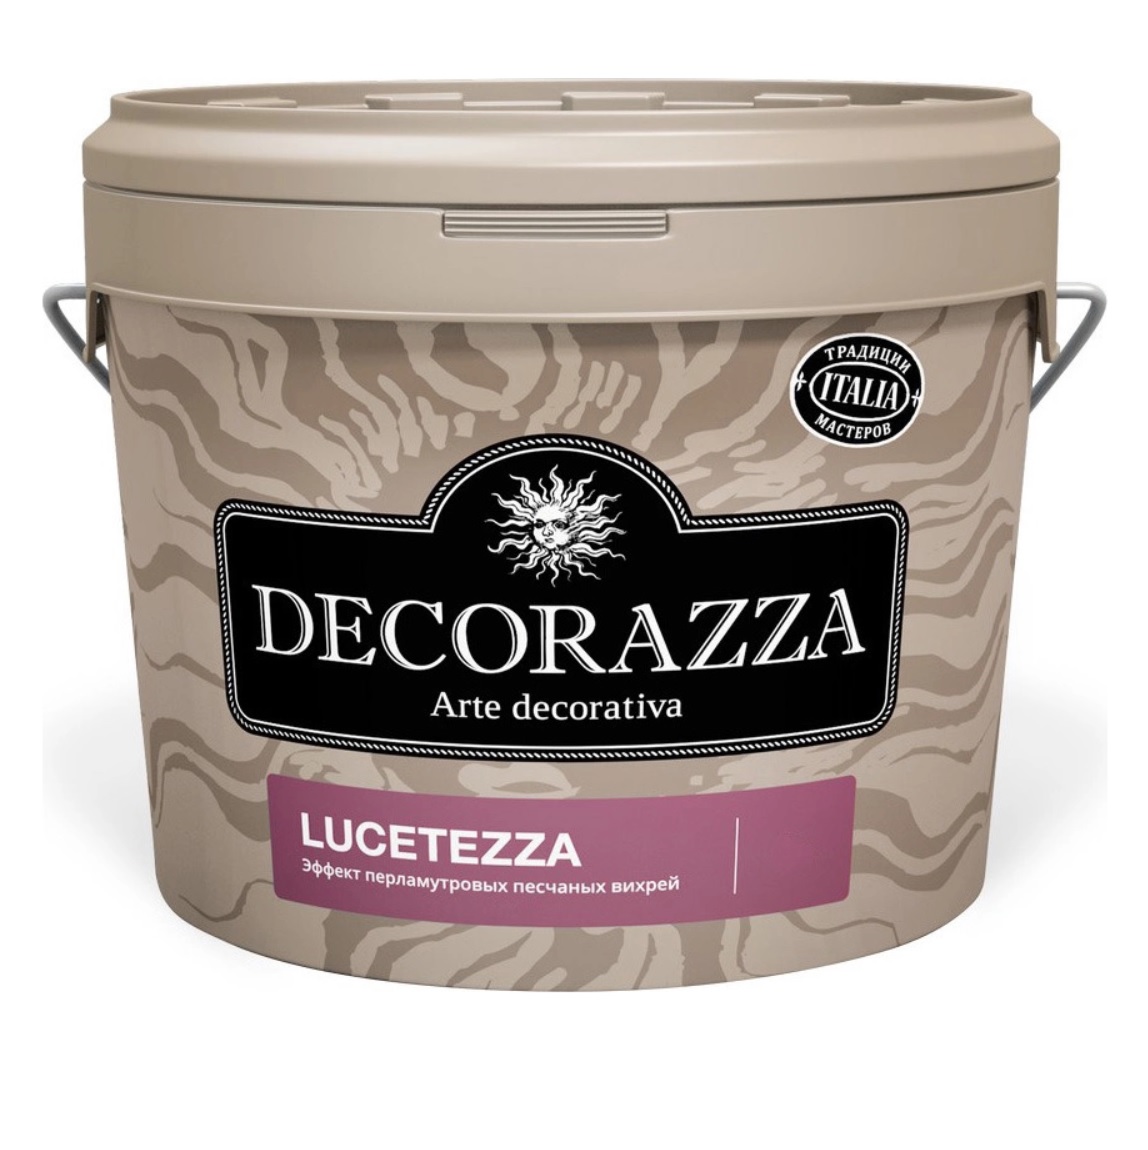 Декоративная краска Decorazza lucetezza база aluminium 1.0кг краска декоративная decorazza alcantara 1 л 0 7 кг